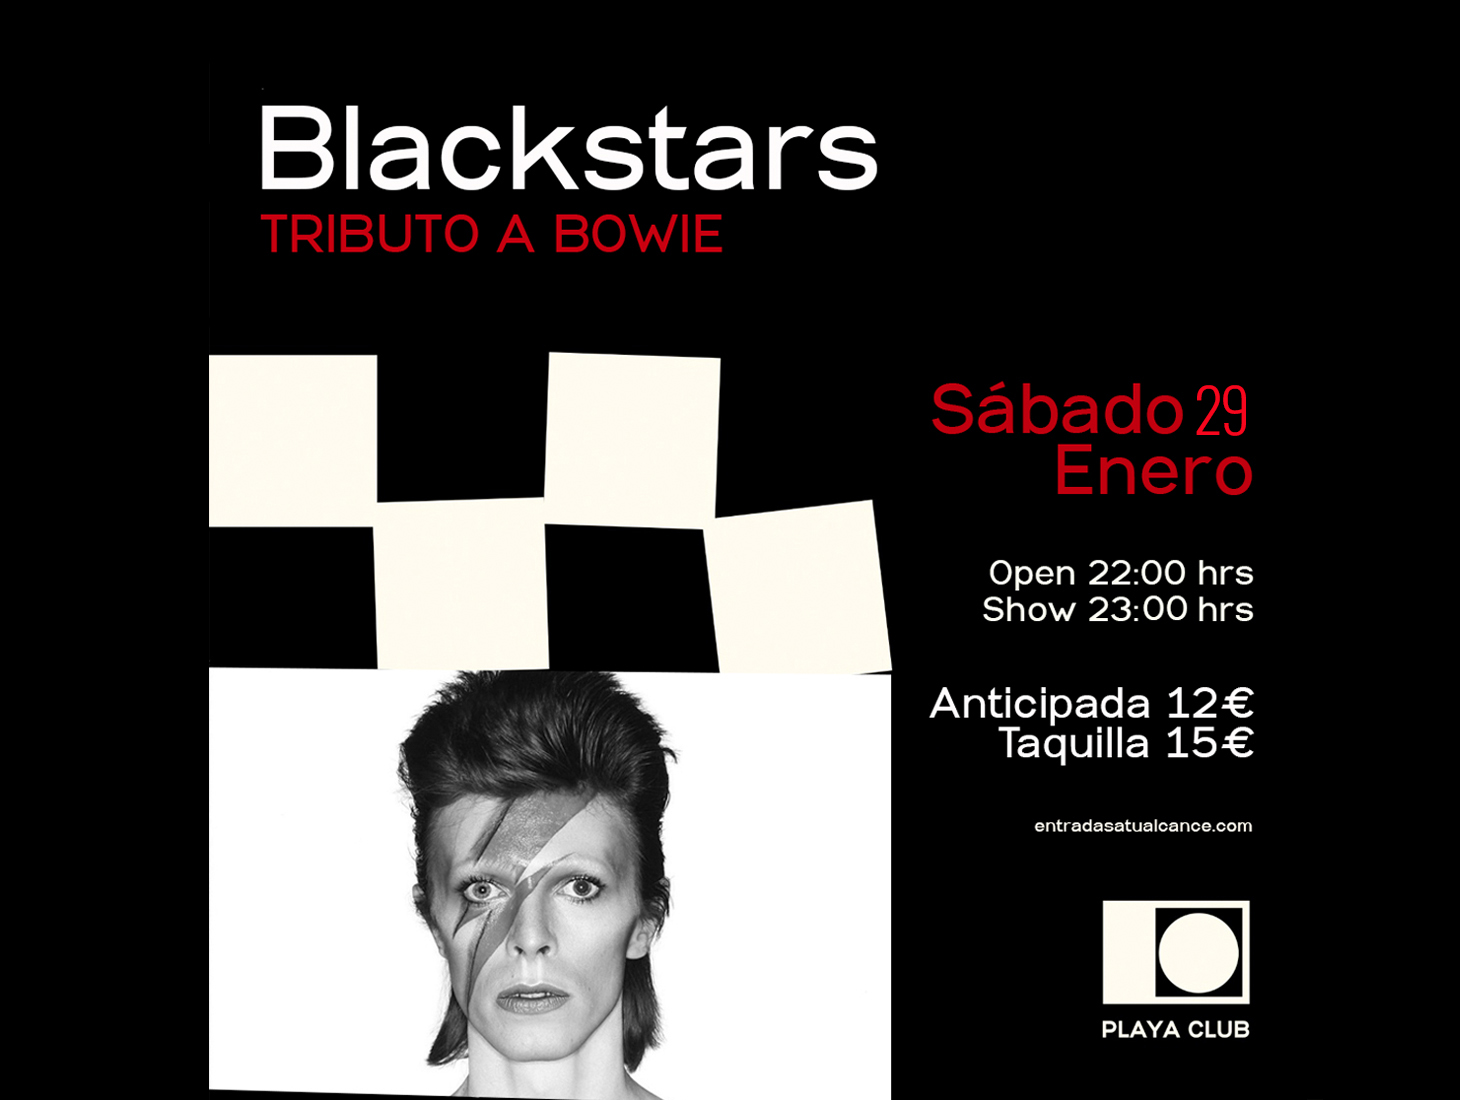 blackstars-tributo-a-bowie-61d320b28e1d42.72766786.jpeg